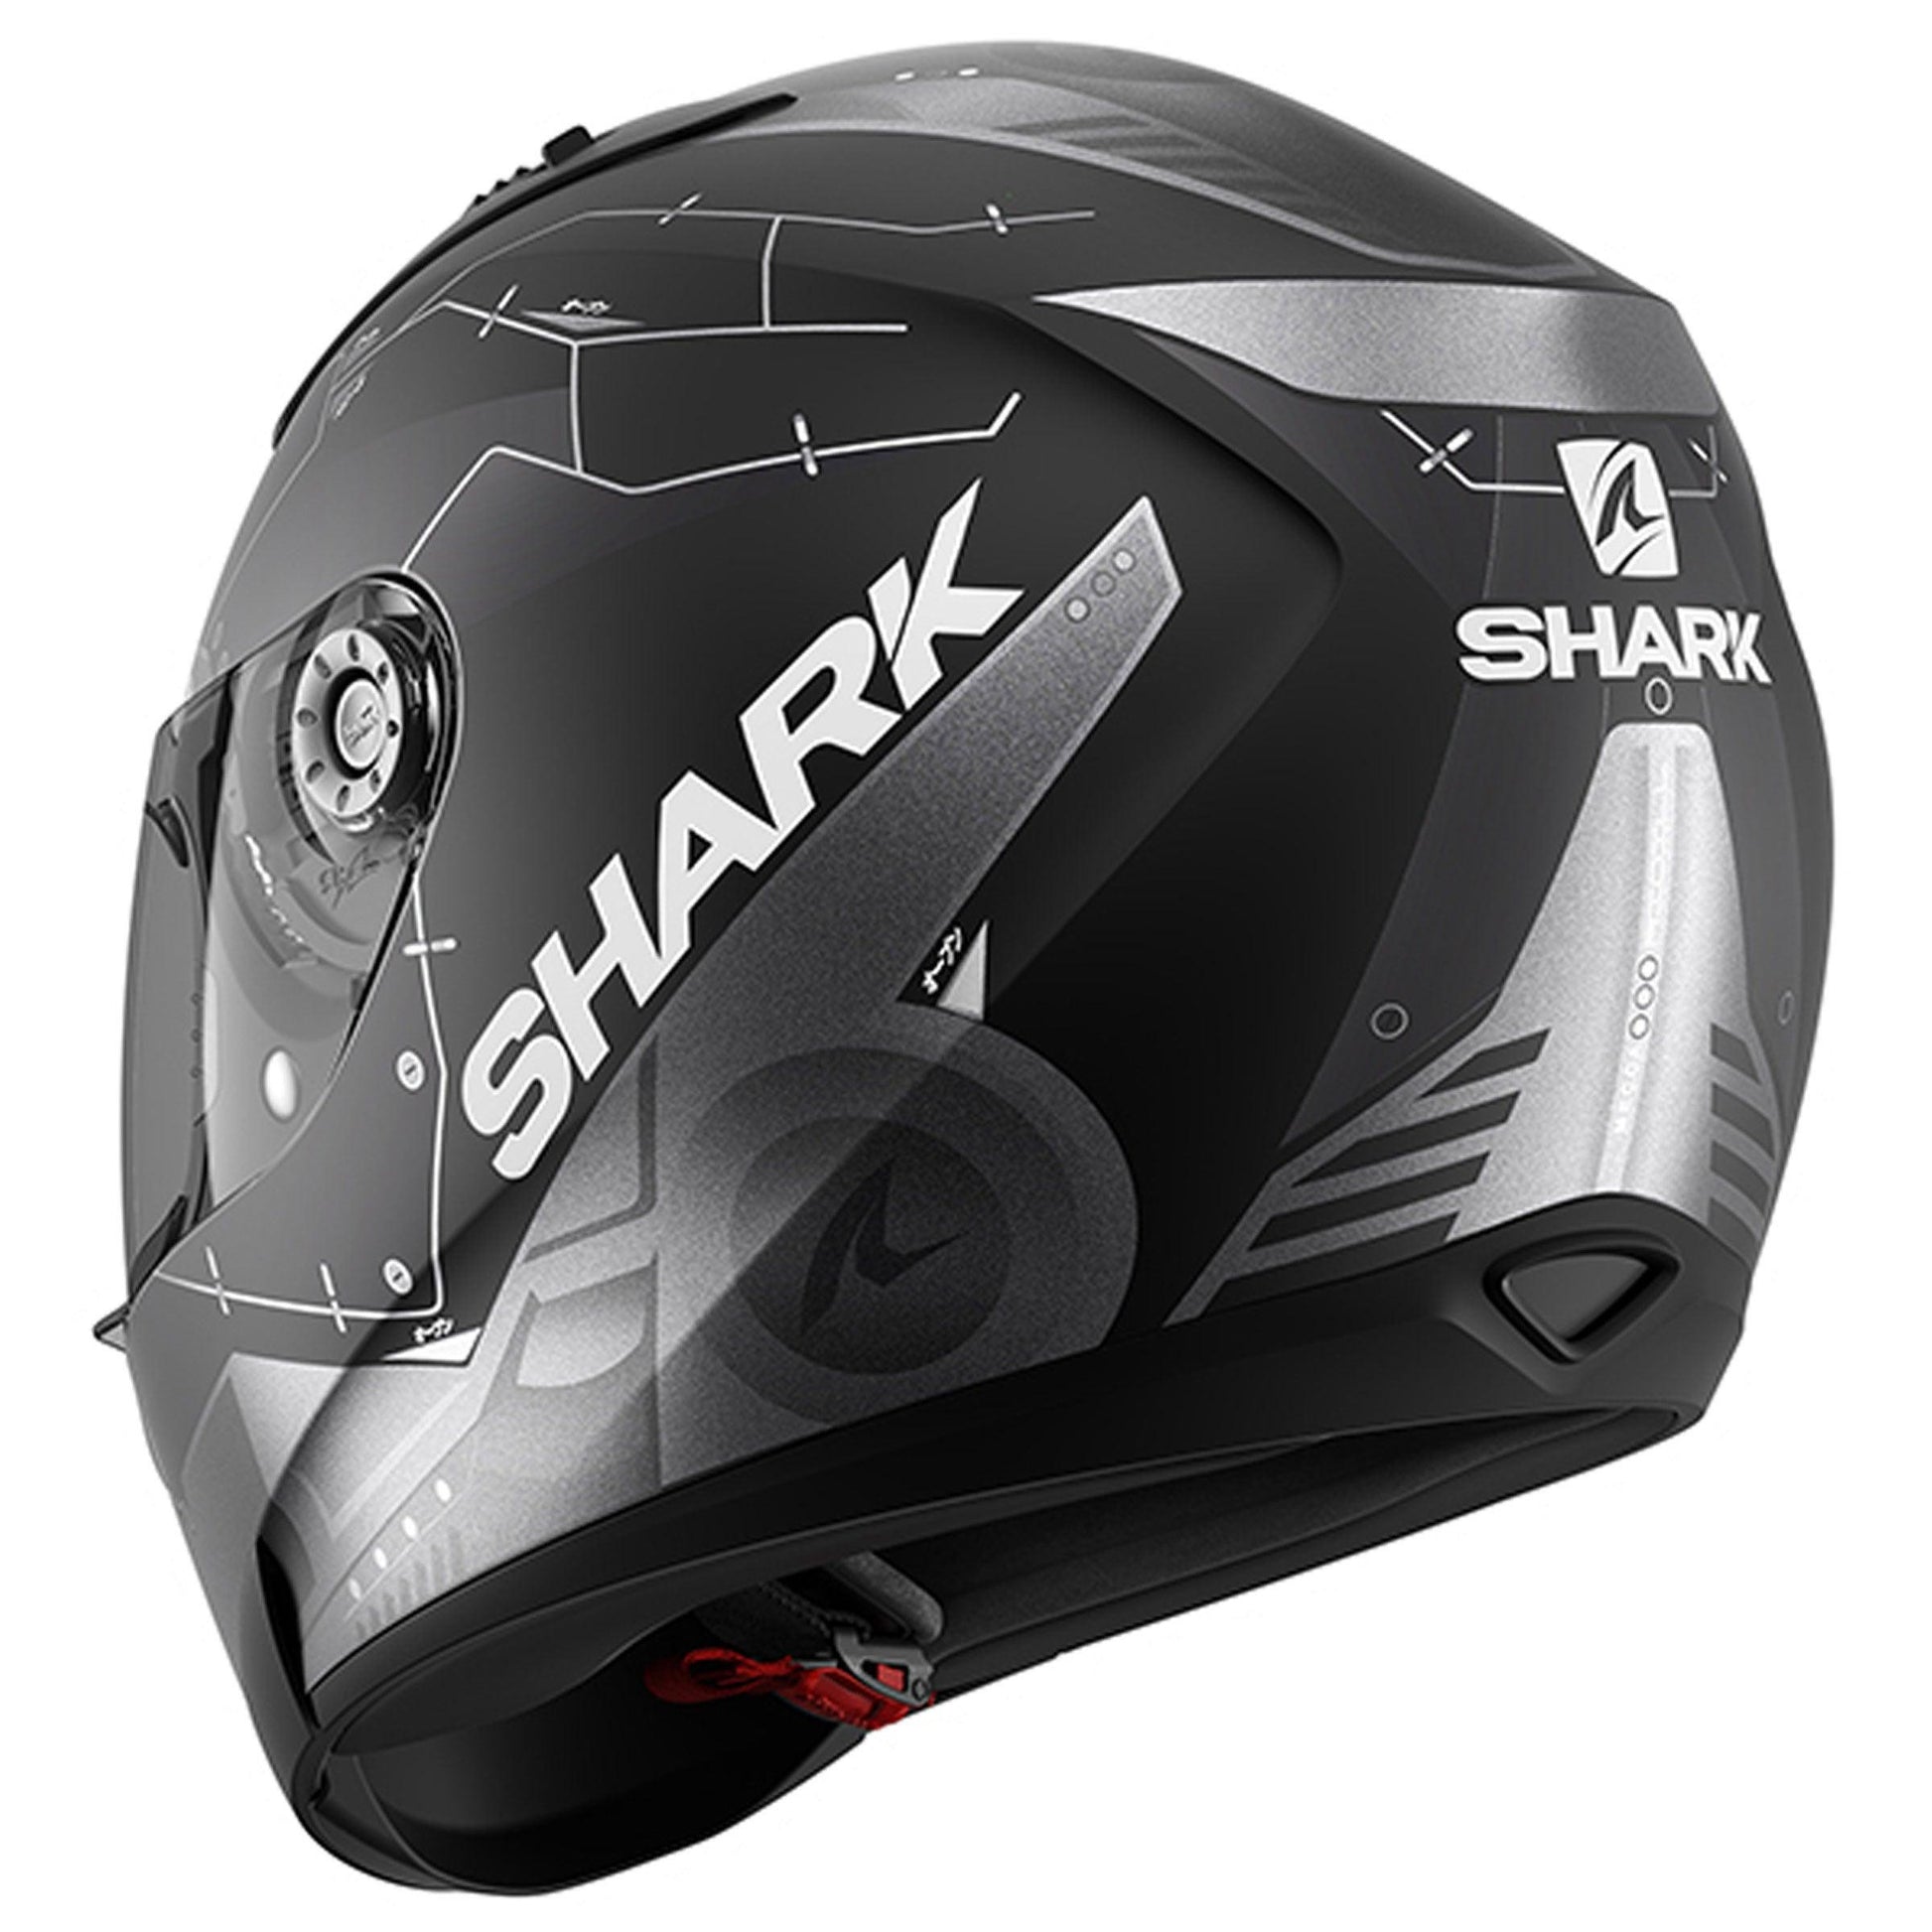 Shark Ridill 1.2 Mecca MAT KAS Helmet - Black Grey Silver - getgearedshop